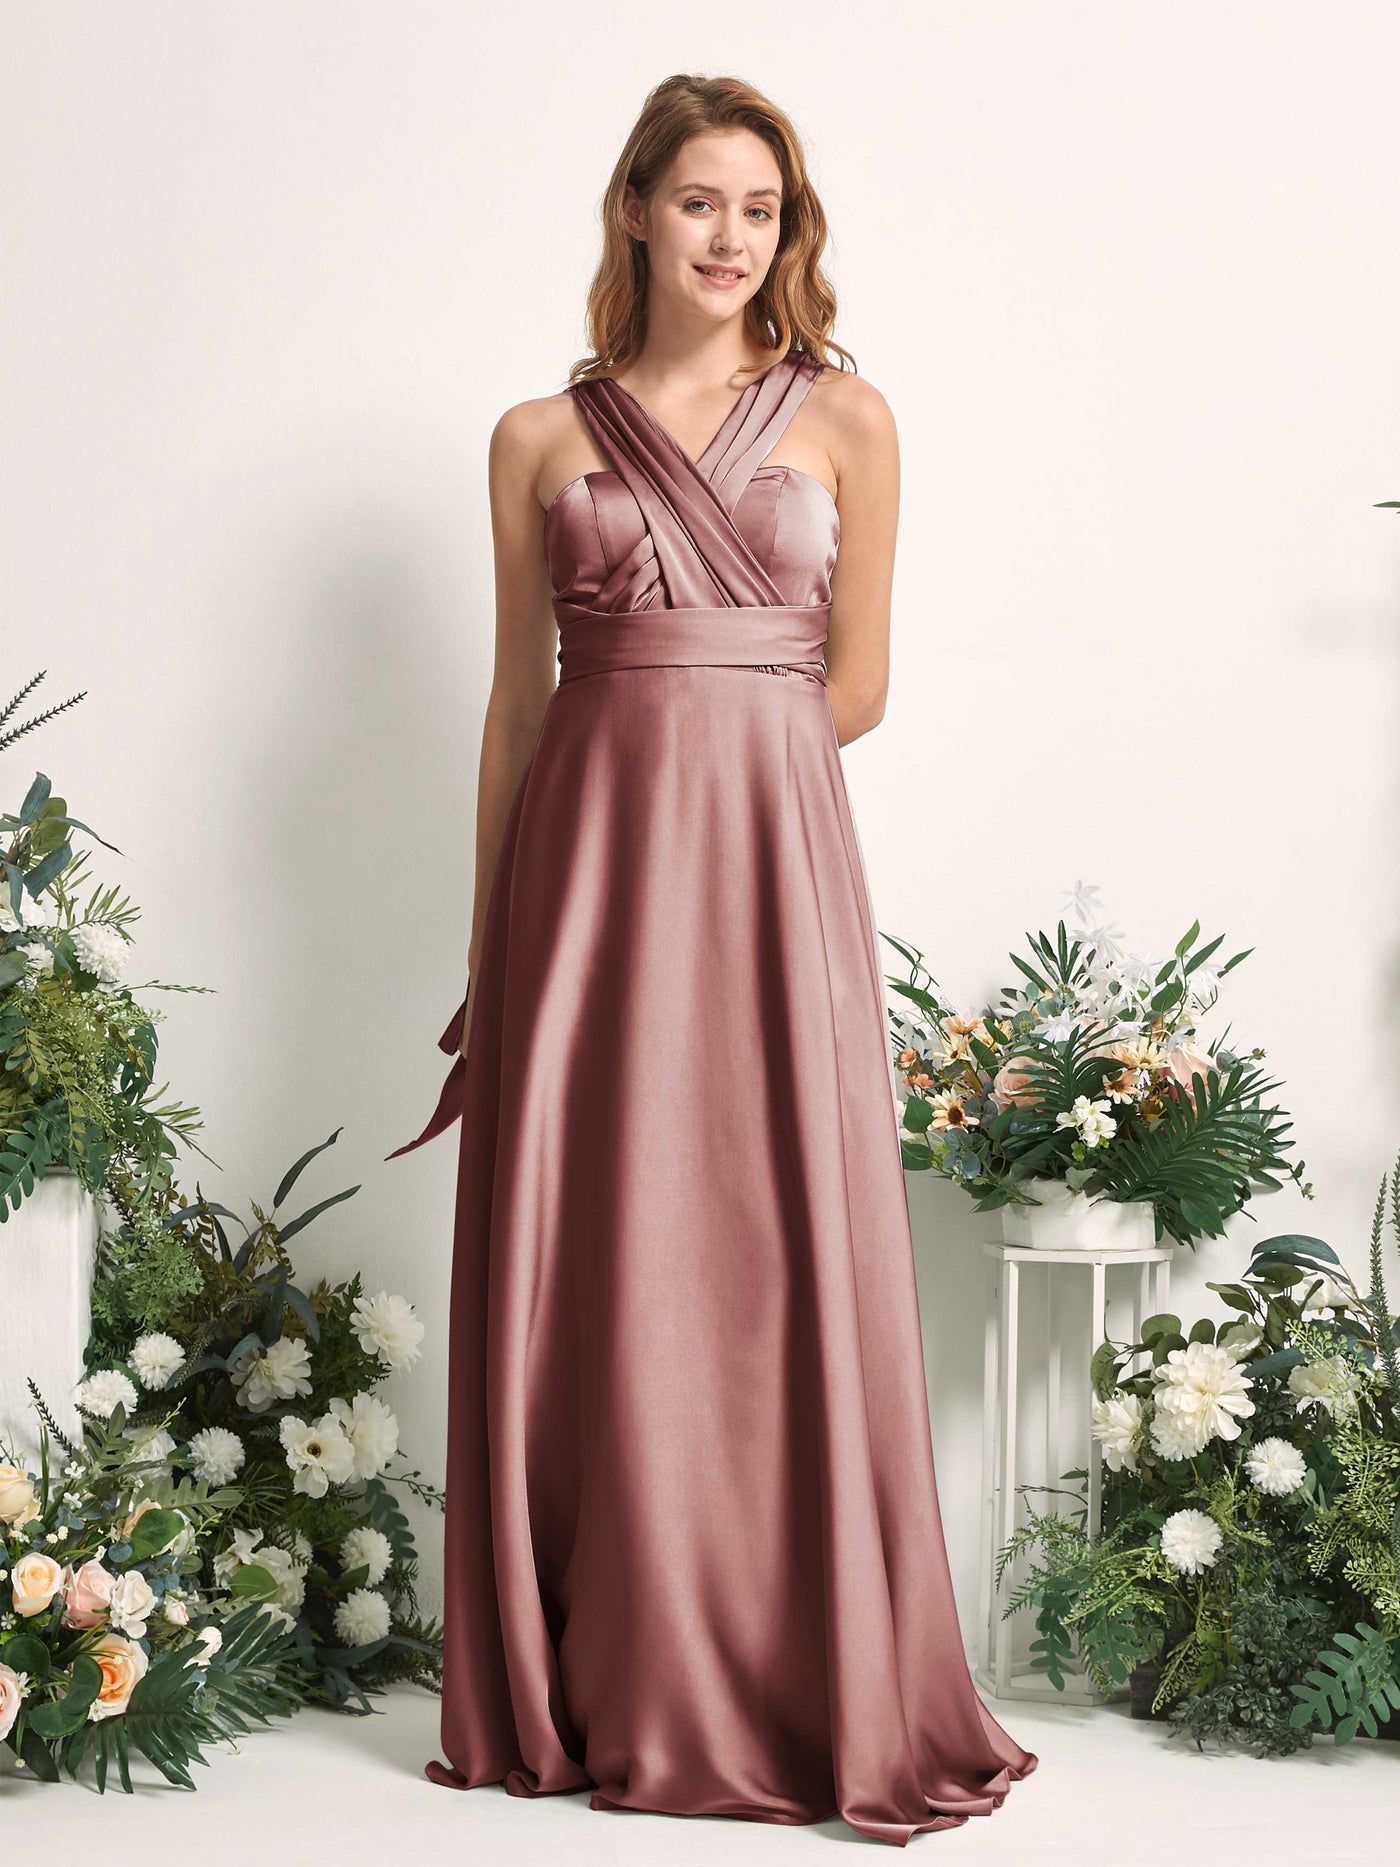 Desert Rose Bridesmaid Dresses Bridesmaid Dress A-line Satin Halter Full Length Short Sleeves Wedding Party Dress (81226417)#color_desert-rose